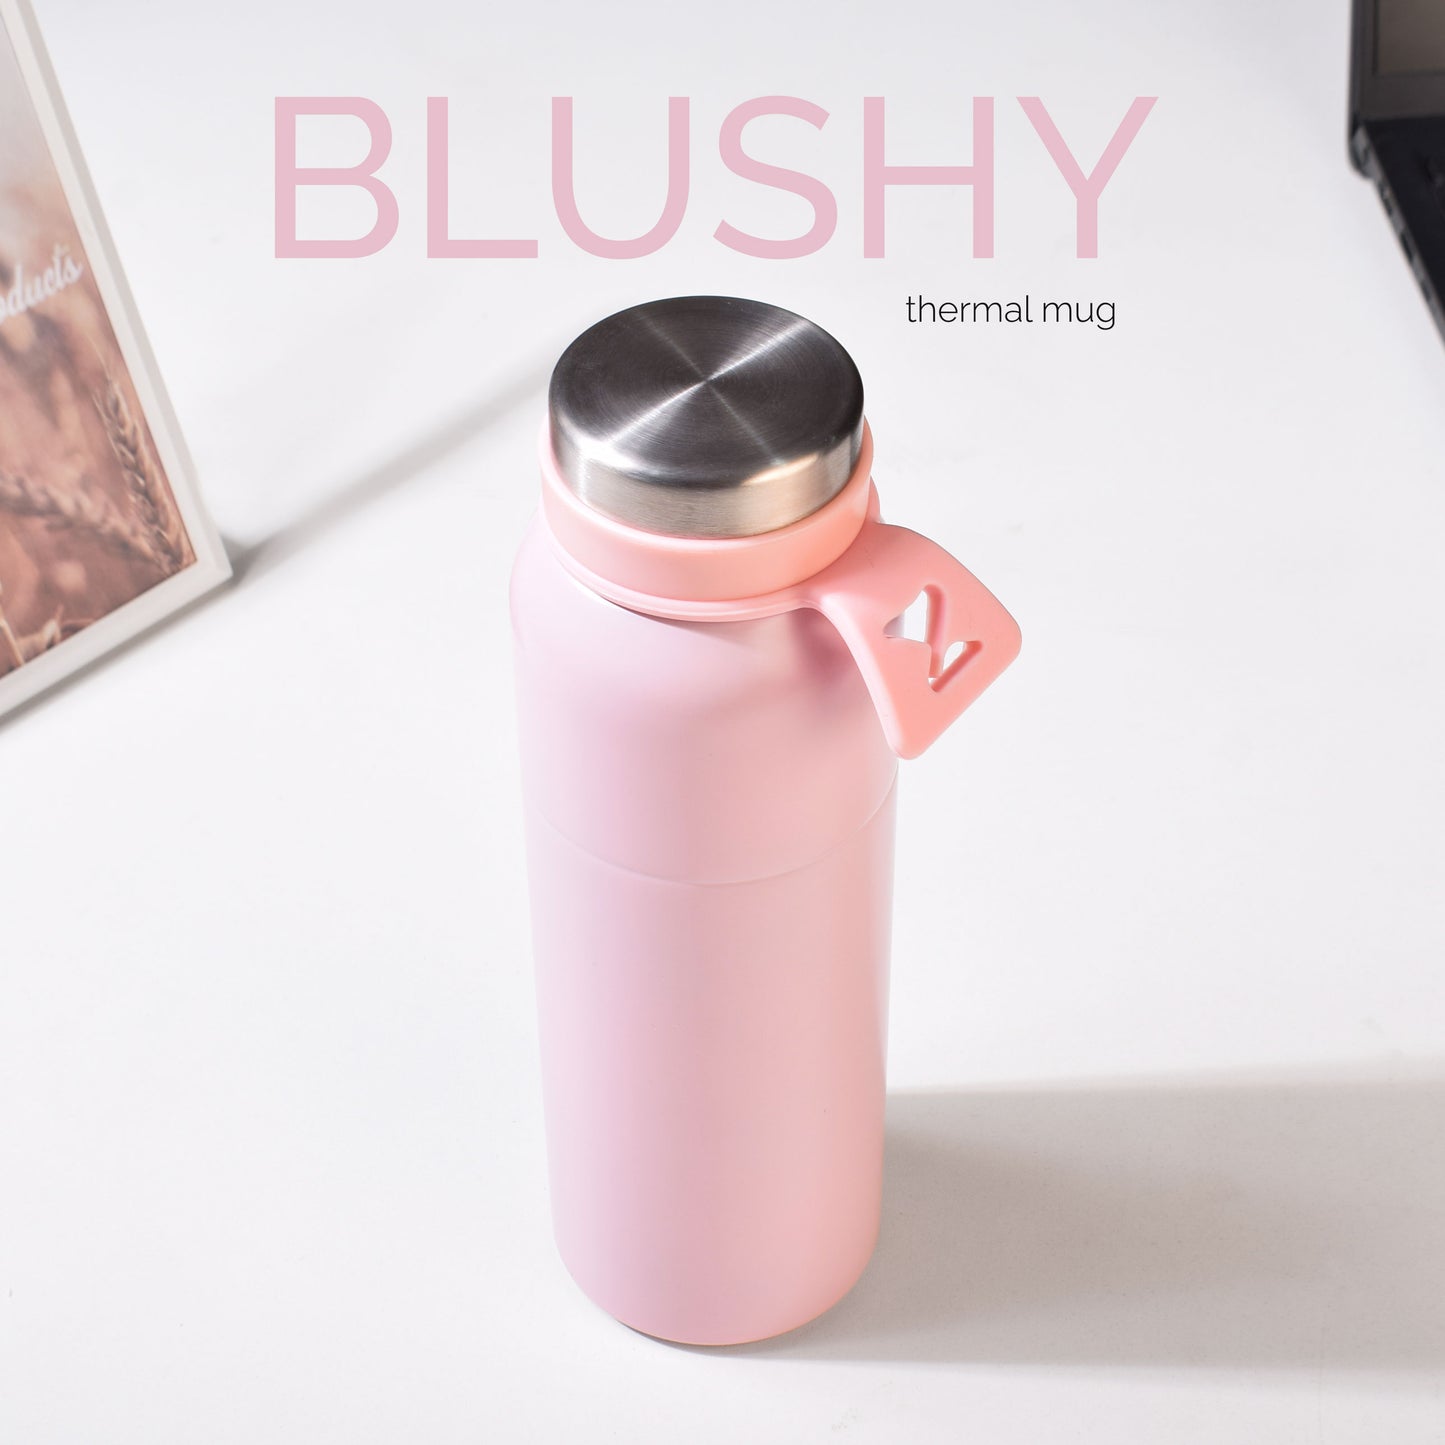 Blushy thermal mug 500Ml